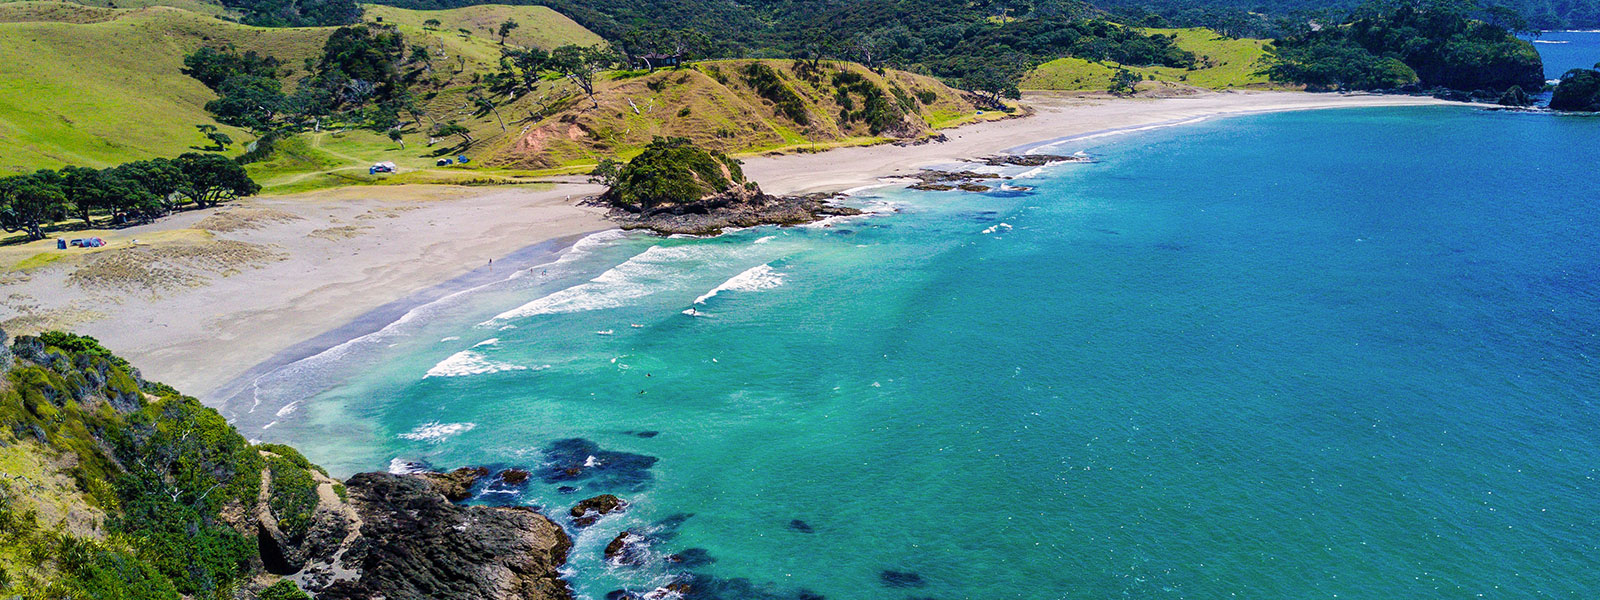 A beach in New Zealand